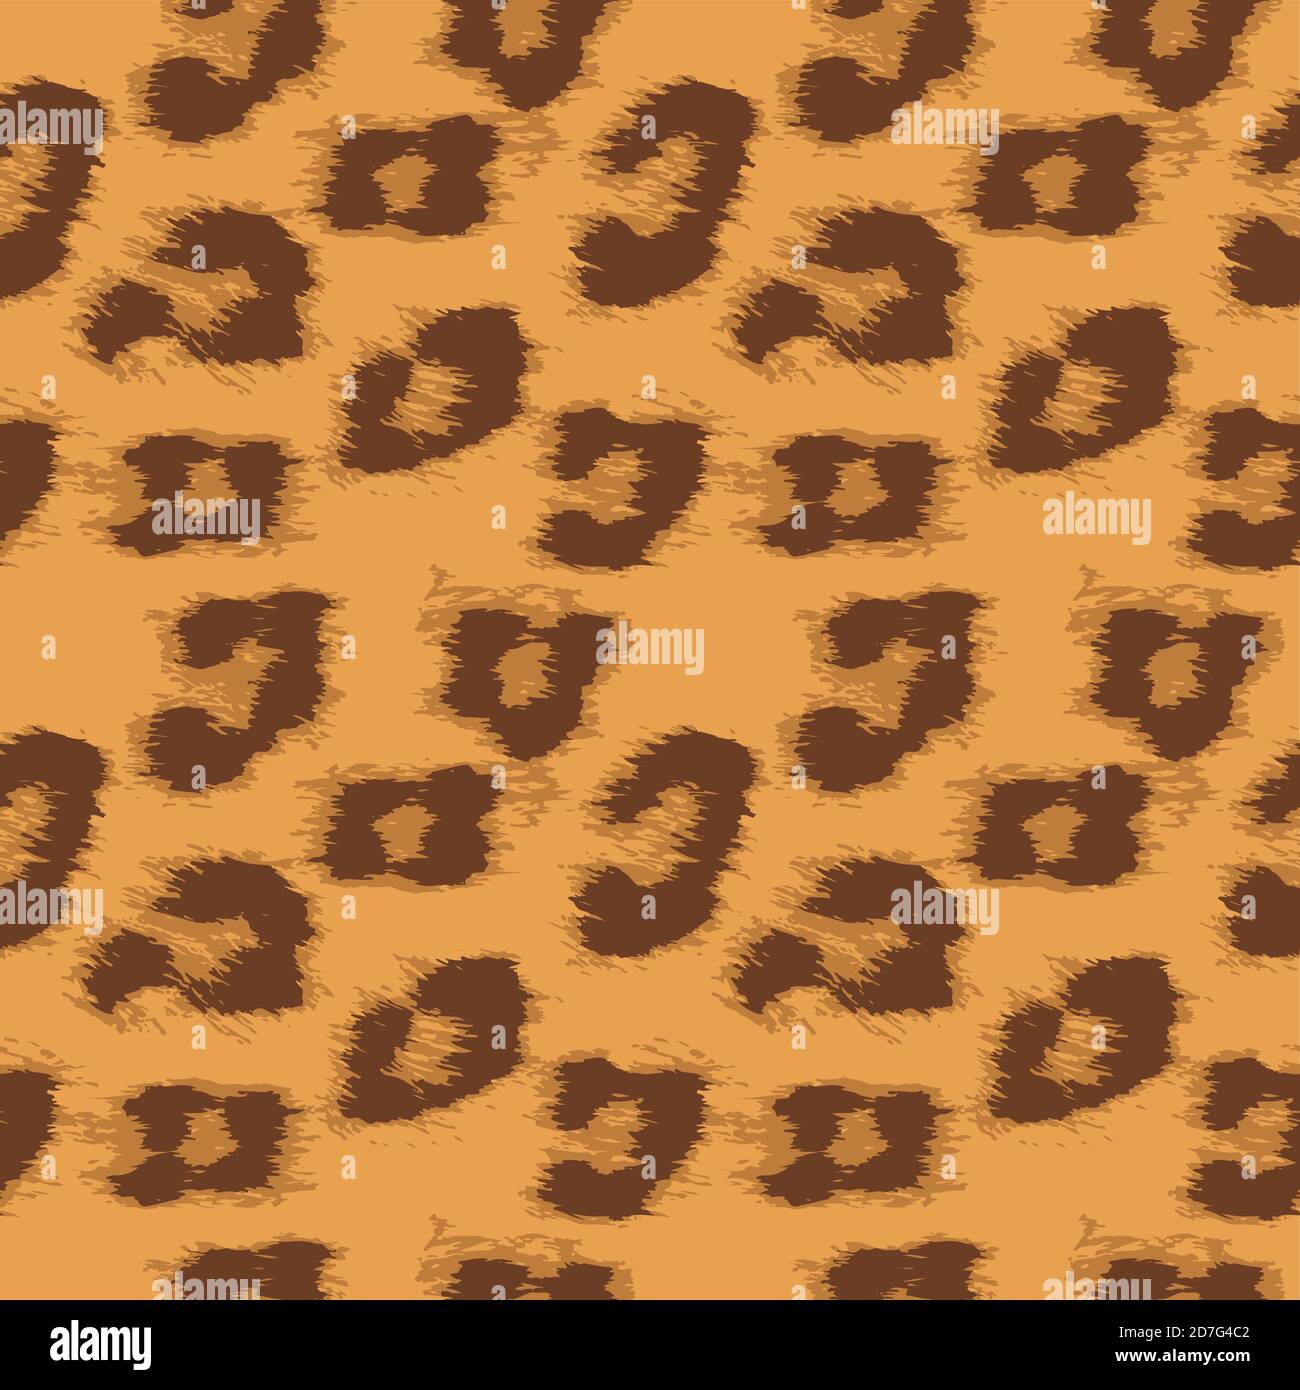 Leopard skin seamless pattern. Textile animal print. Stock Vector